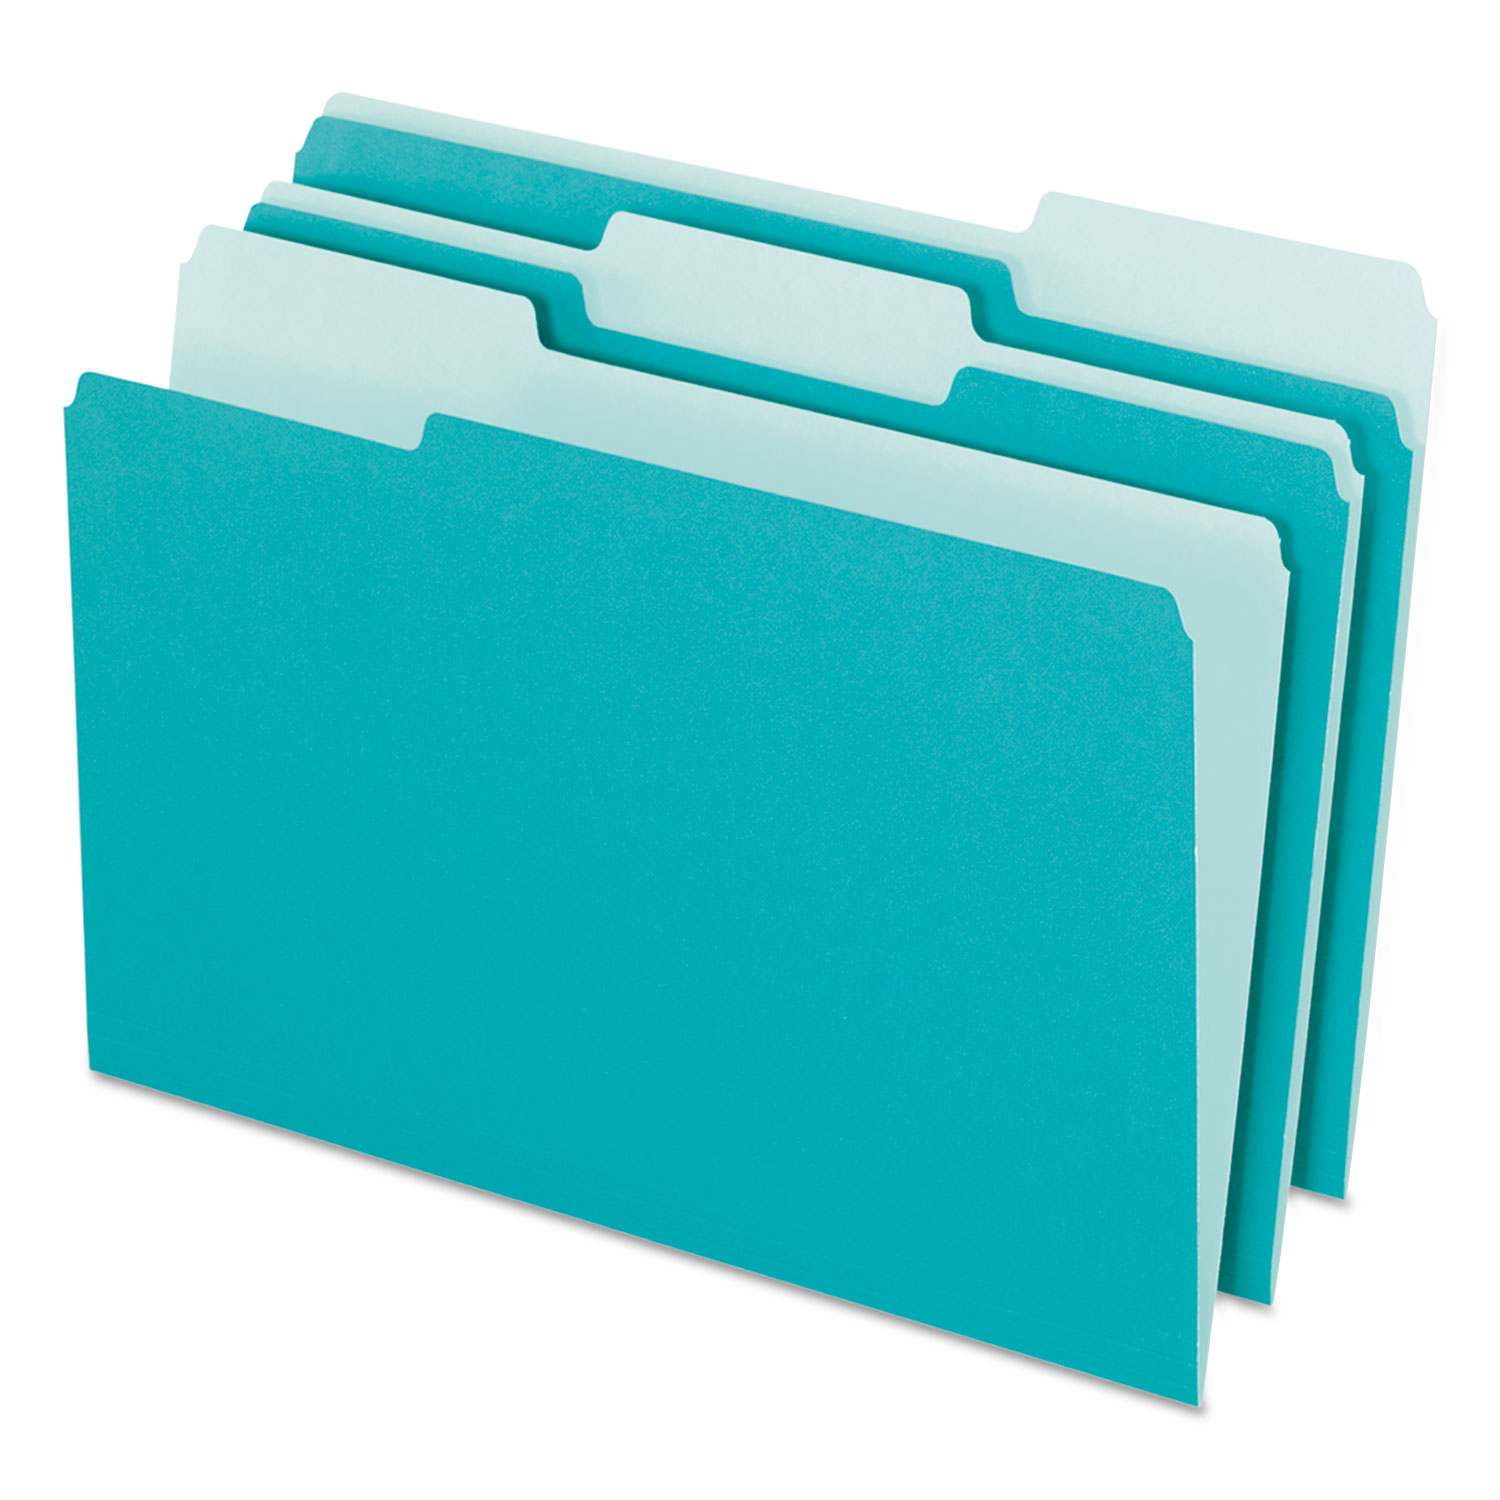  Pendaflex 4210 1/3 AQU Interior File Folders, 1/3-Cut Tabs, Letter Size, Aqua, 100/Box (PFX421013AQU) 